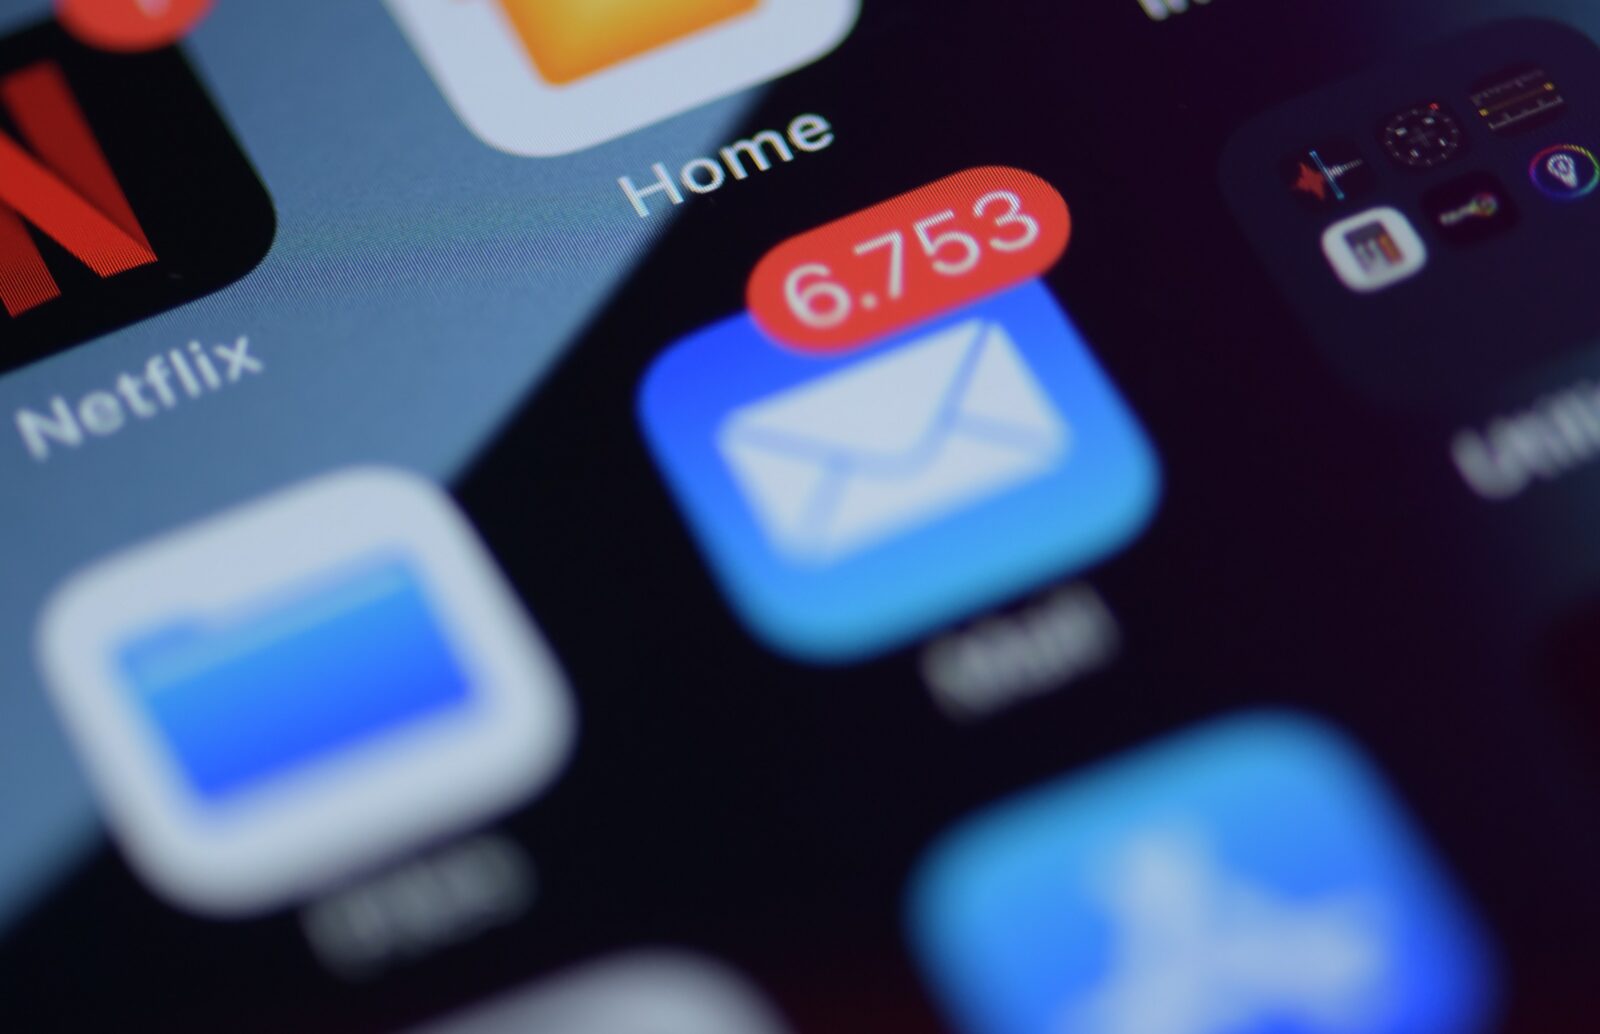 iPhone setting is Mail apps best kept secret